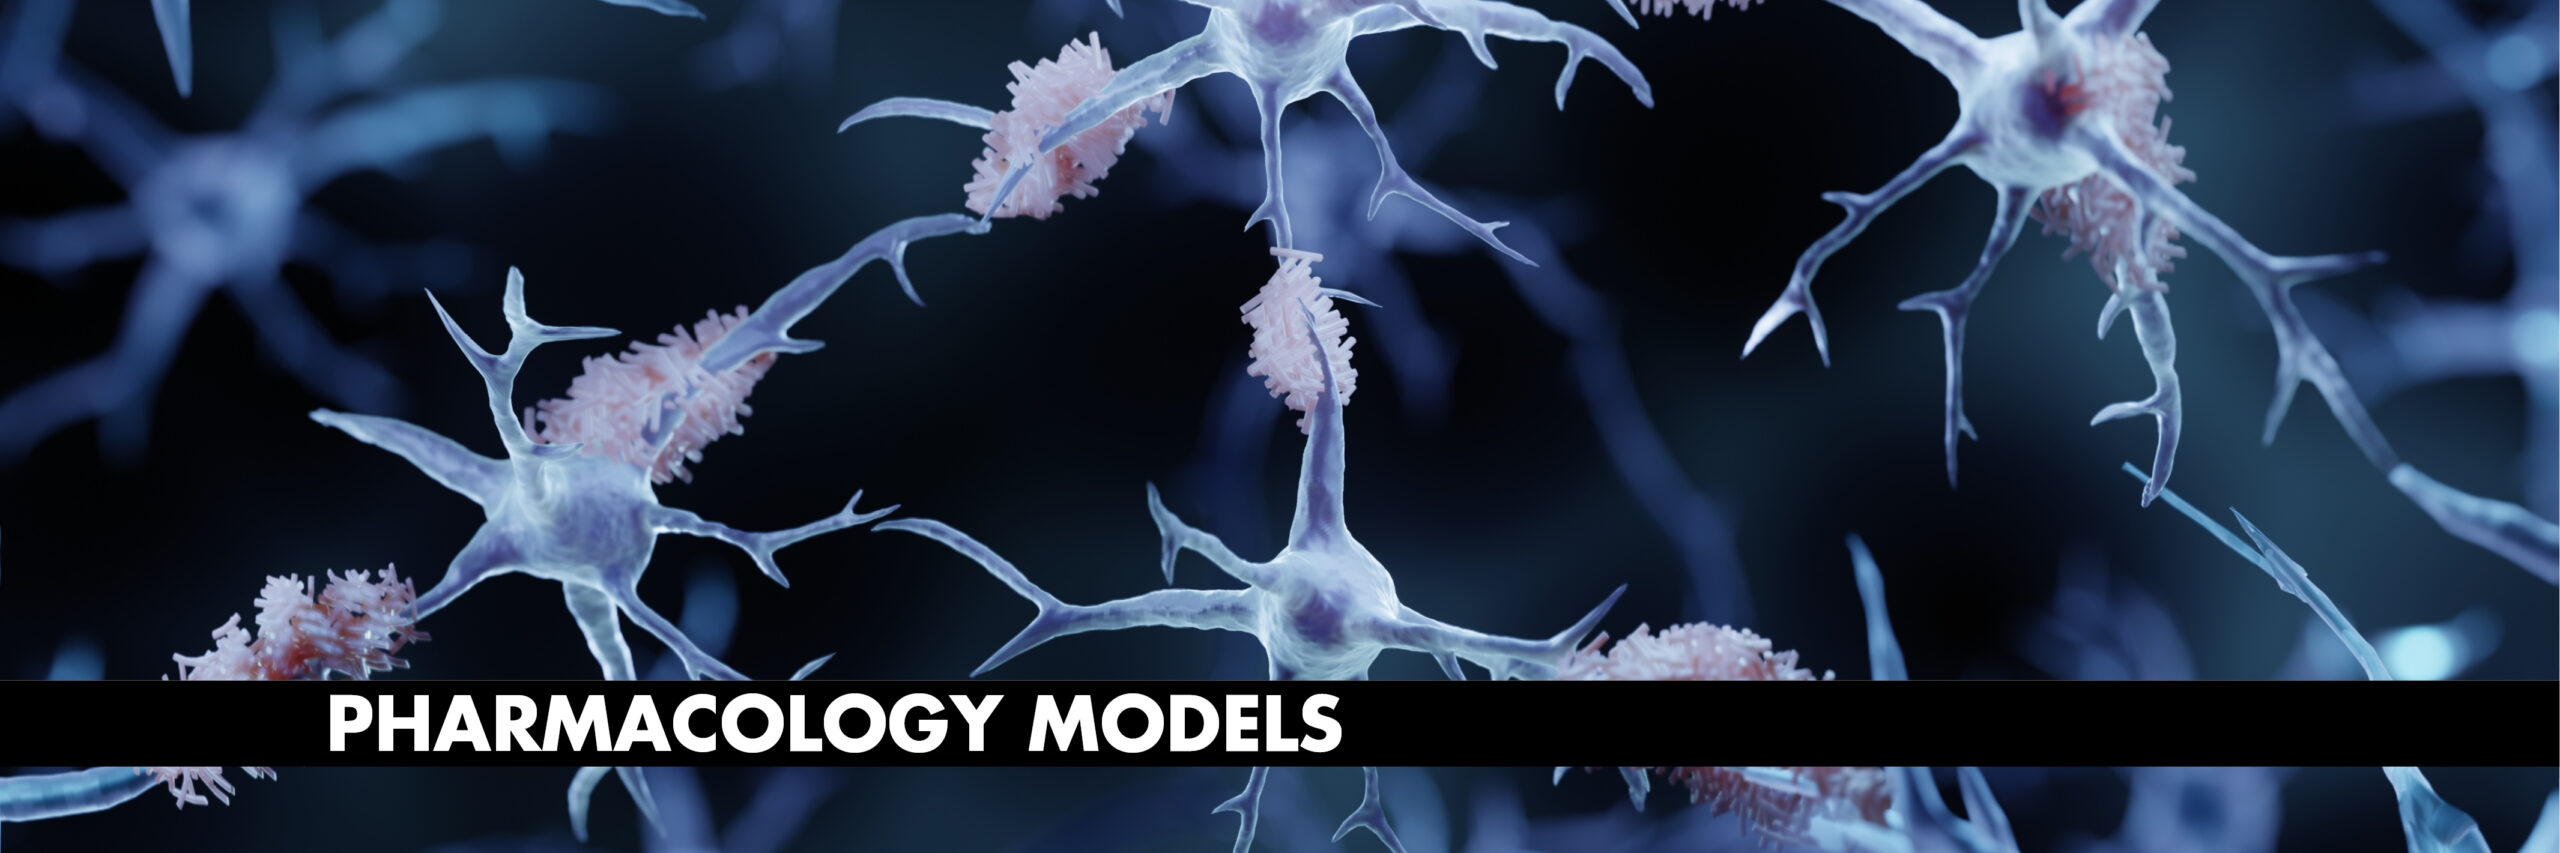 Pharmacology Models